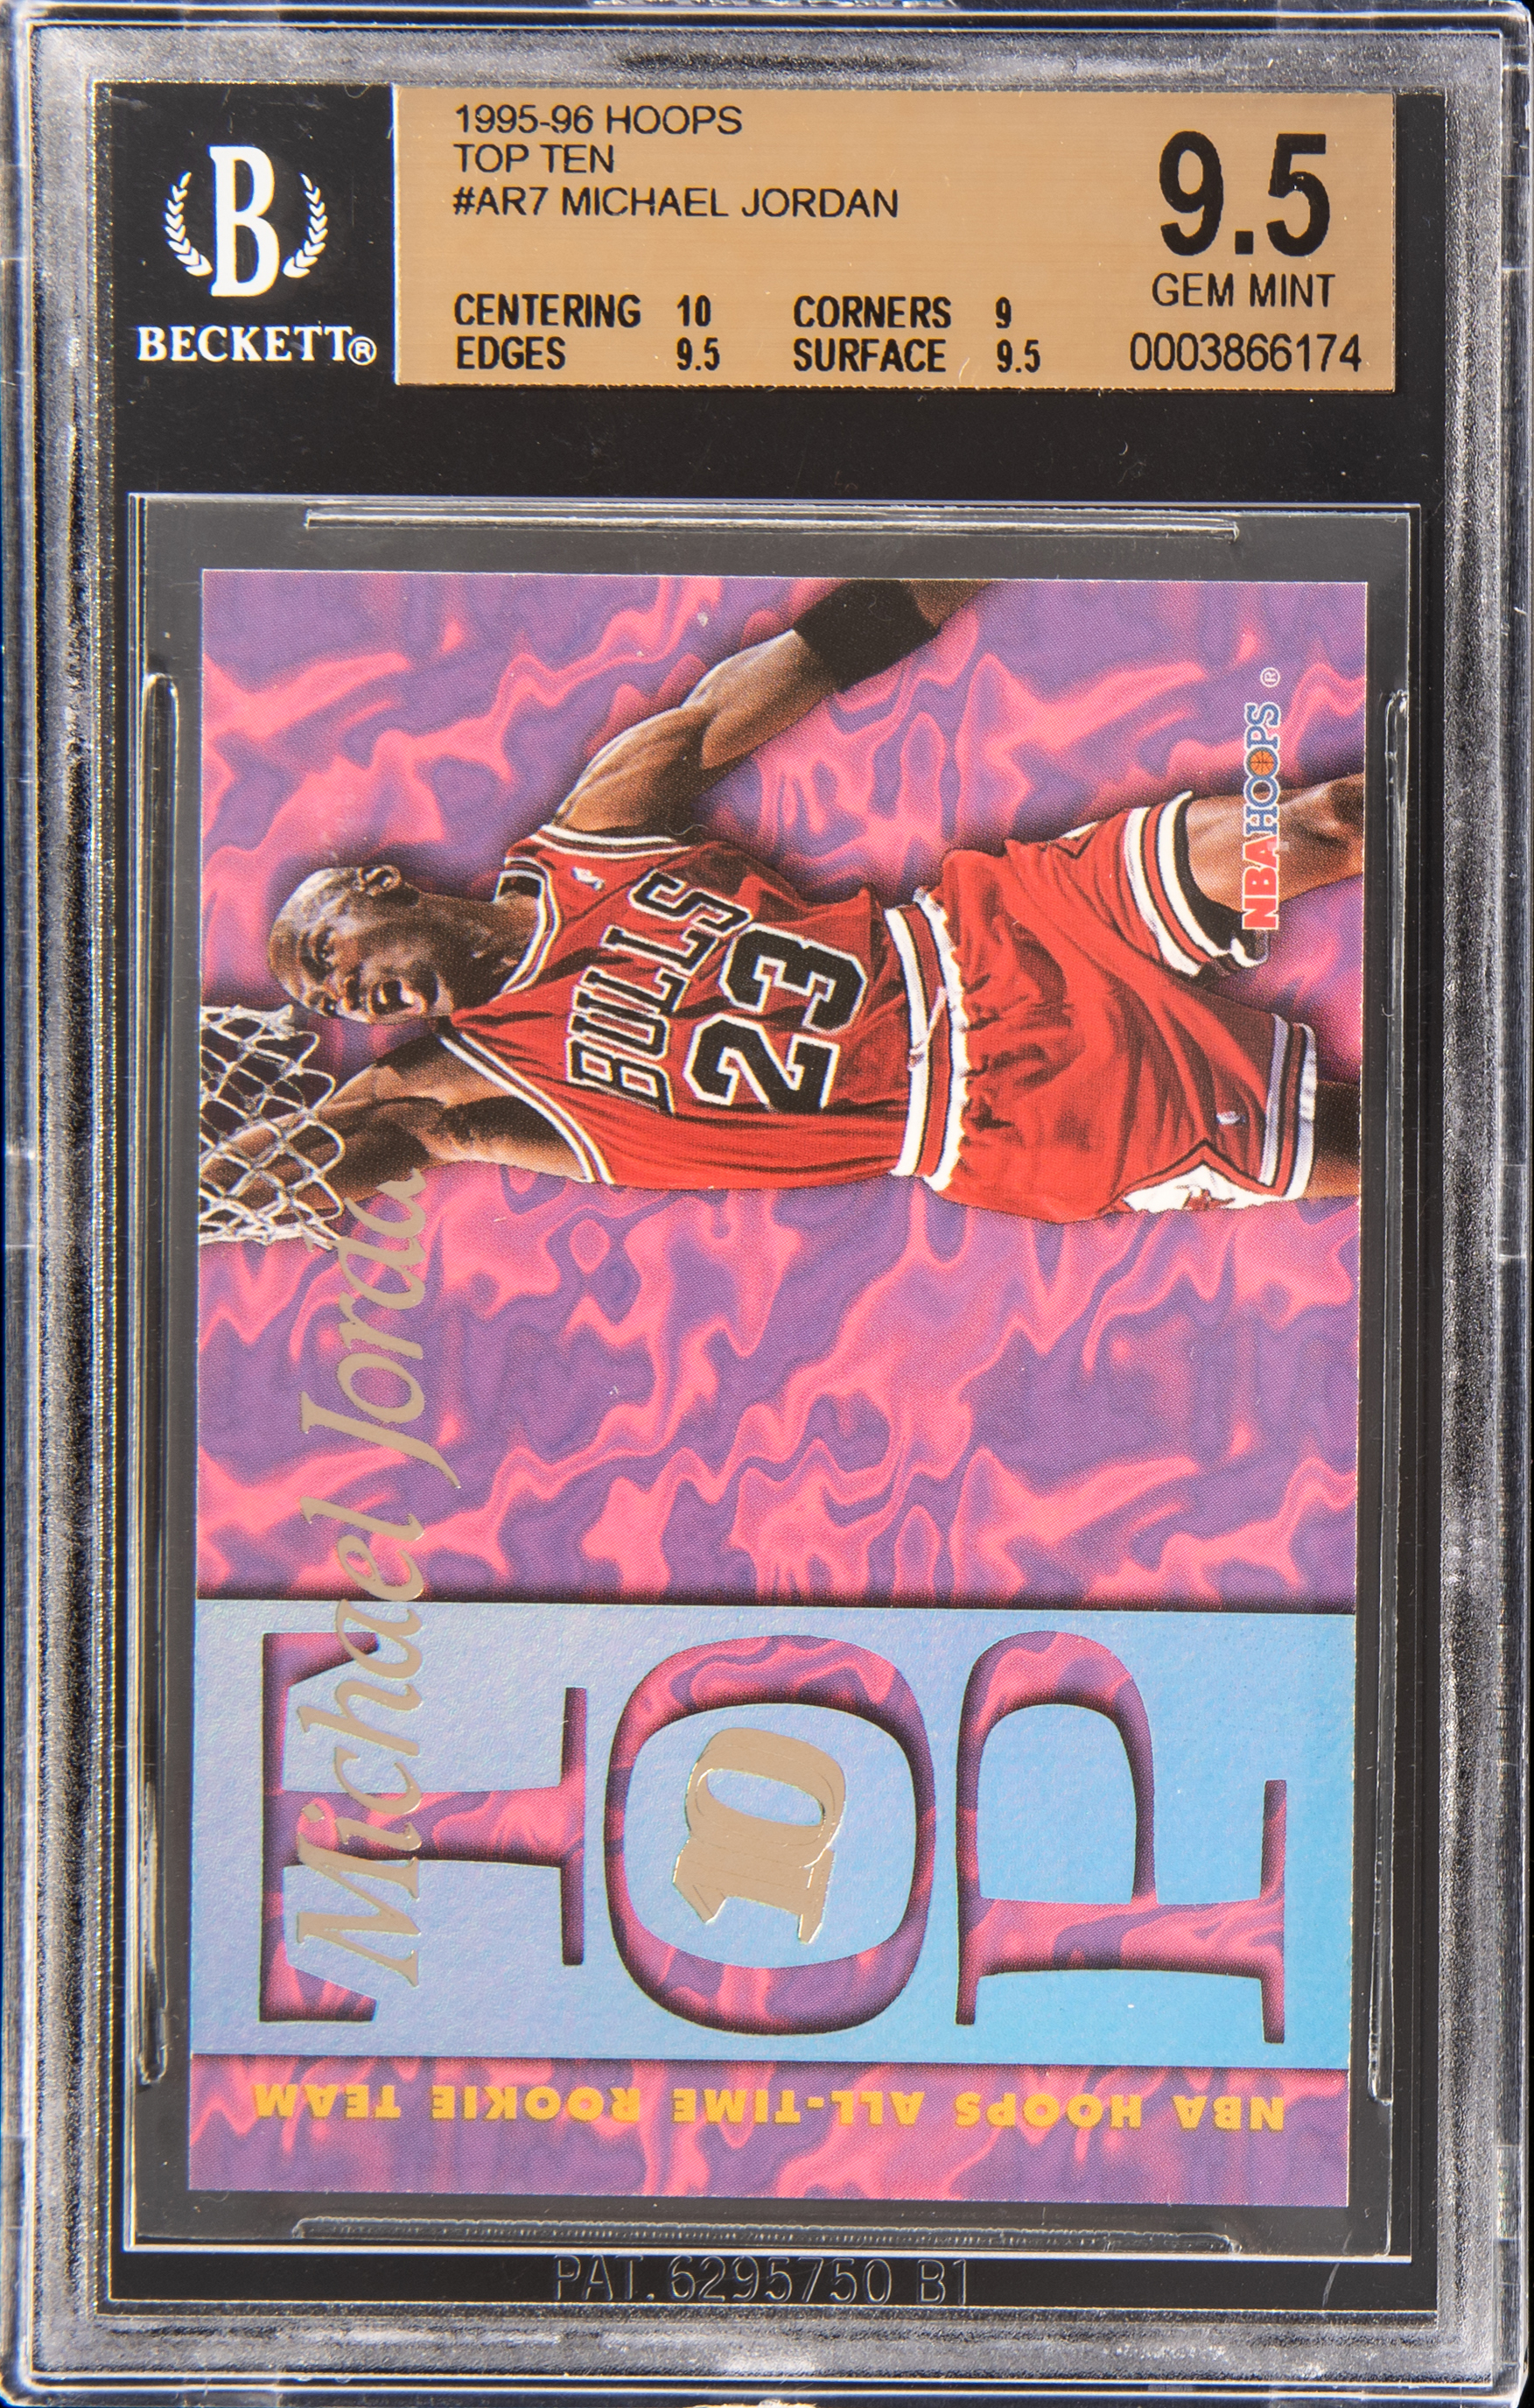 1995-96 Hoops Top Ten #AR7 Michael Jordan – BGS GEM MINT 9.5